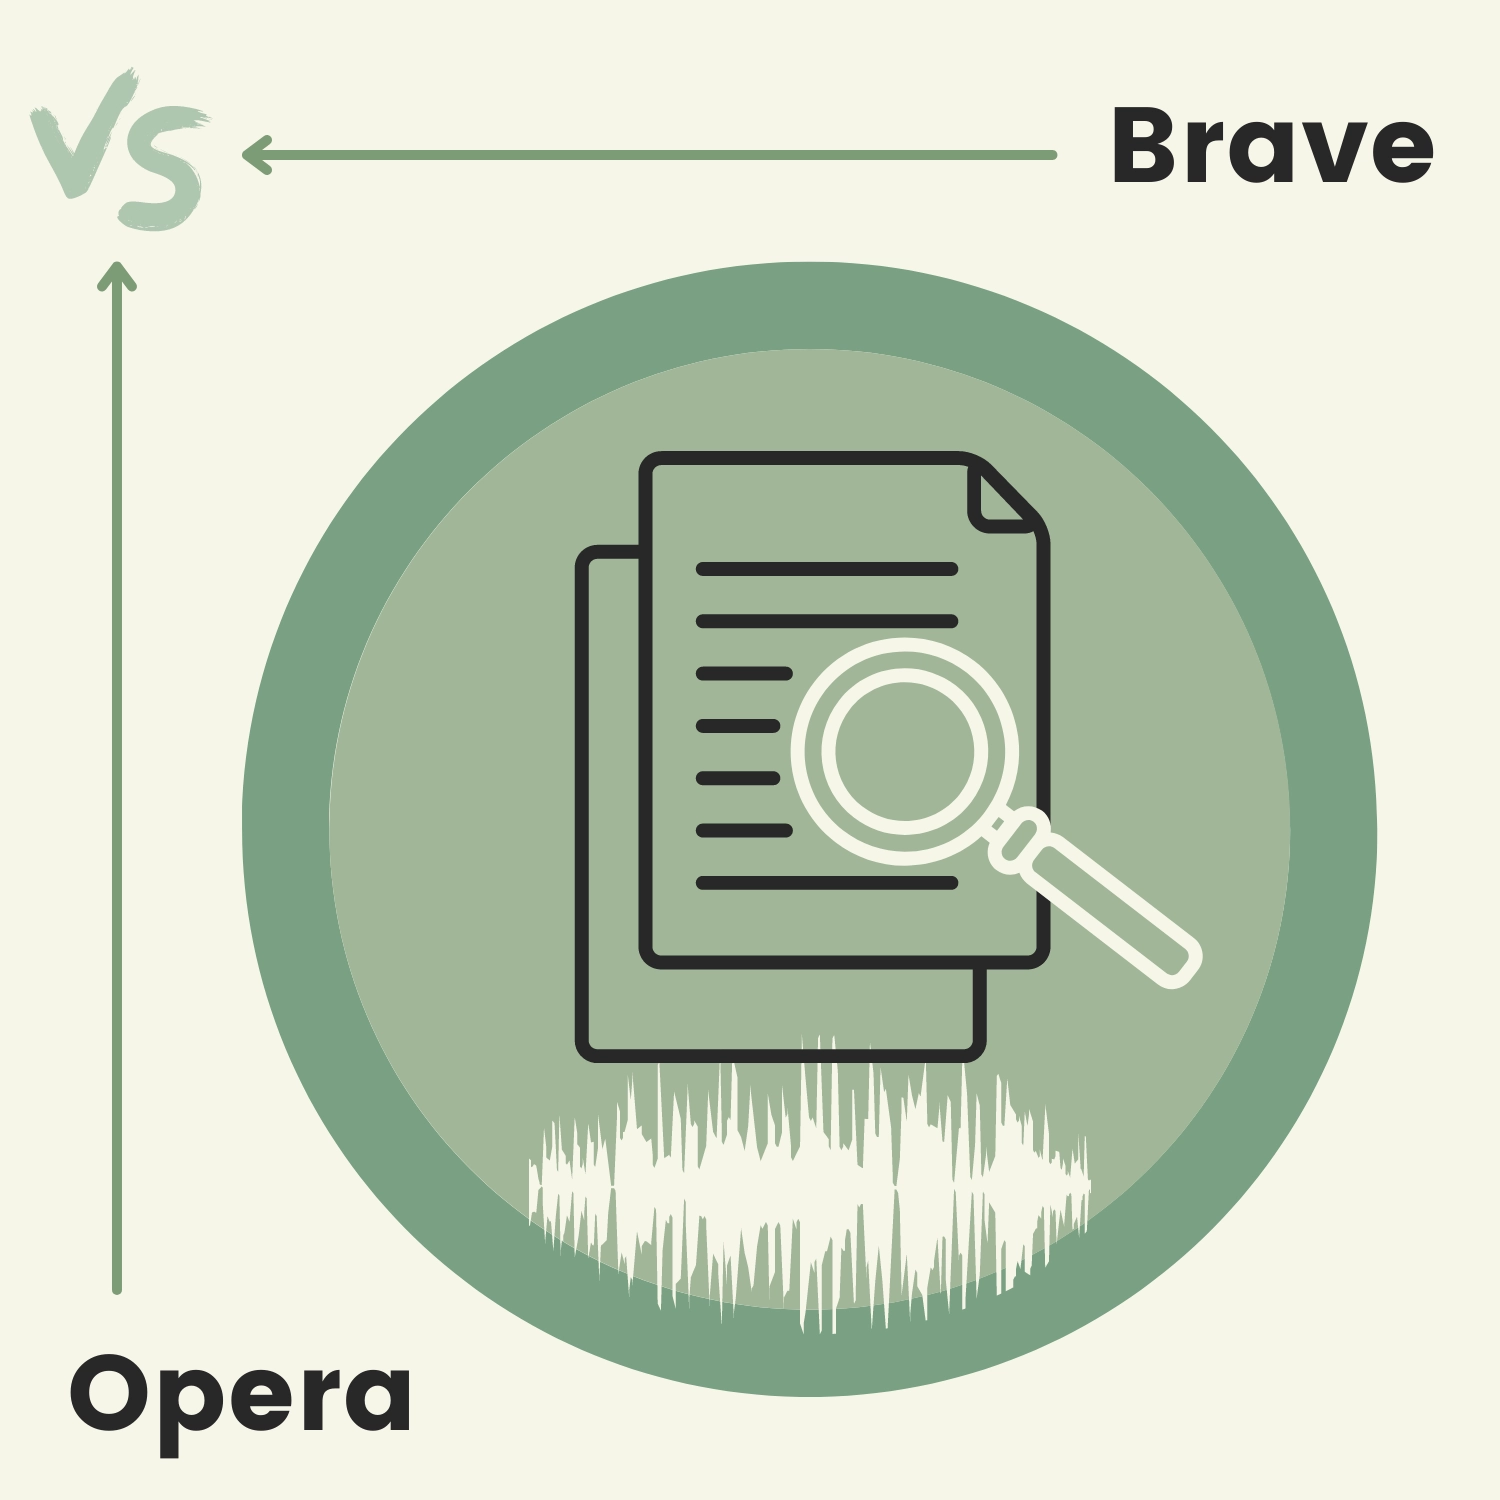 Brave vs Opera